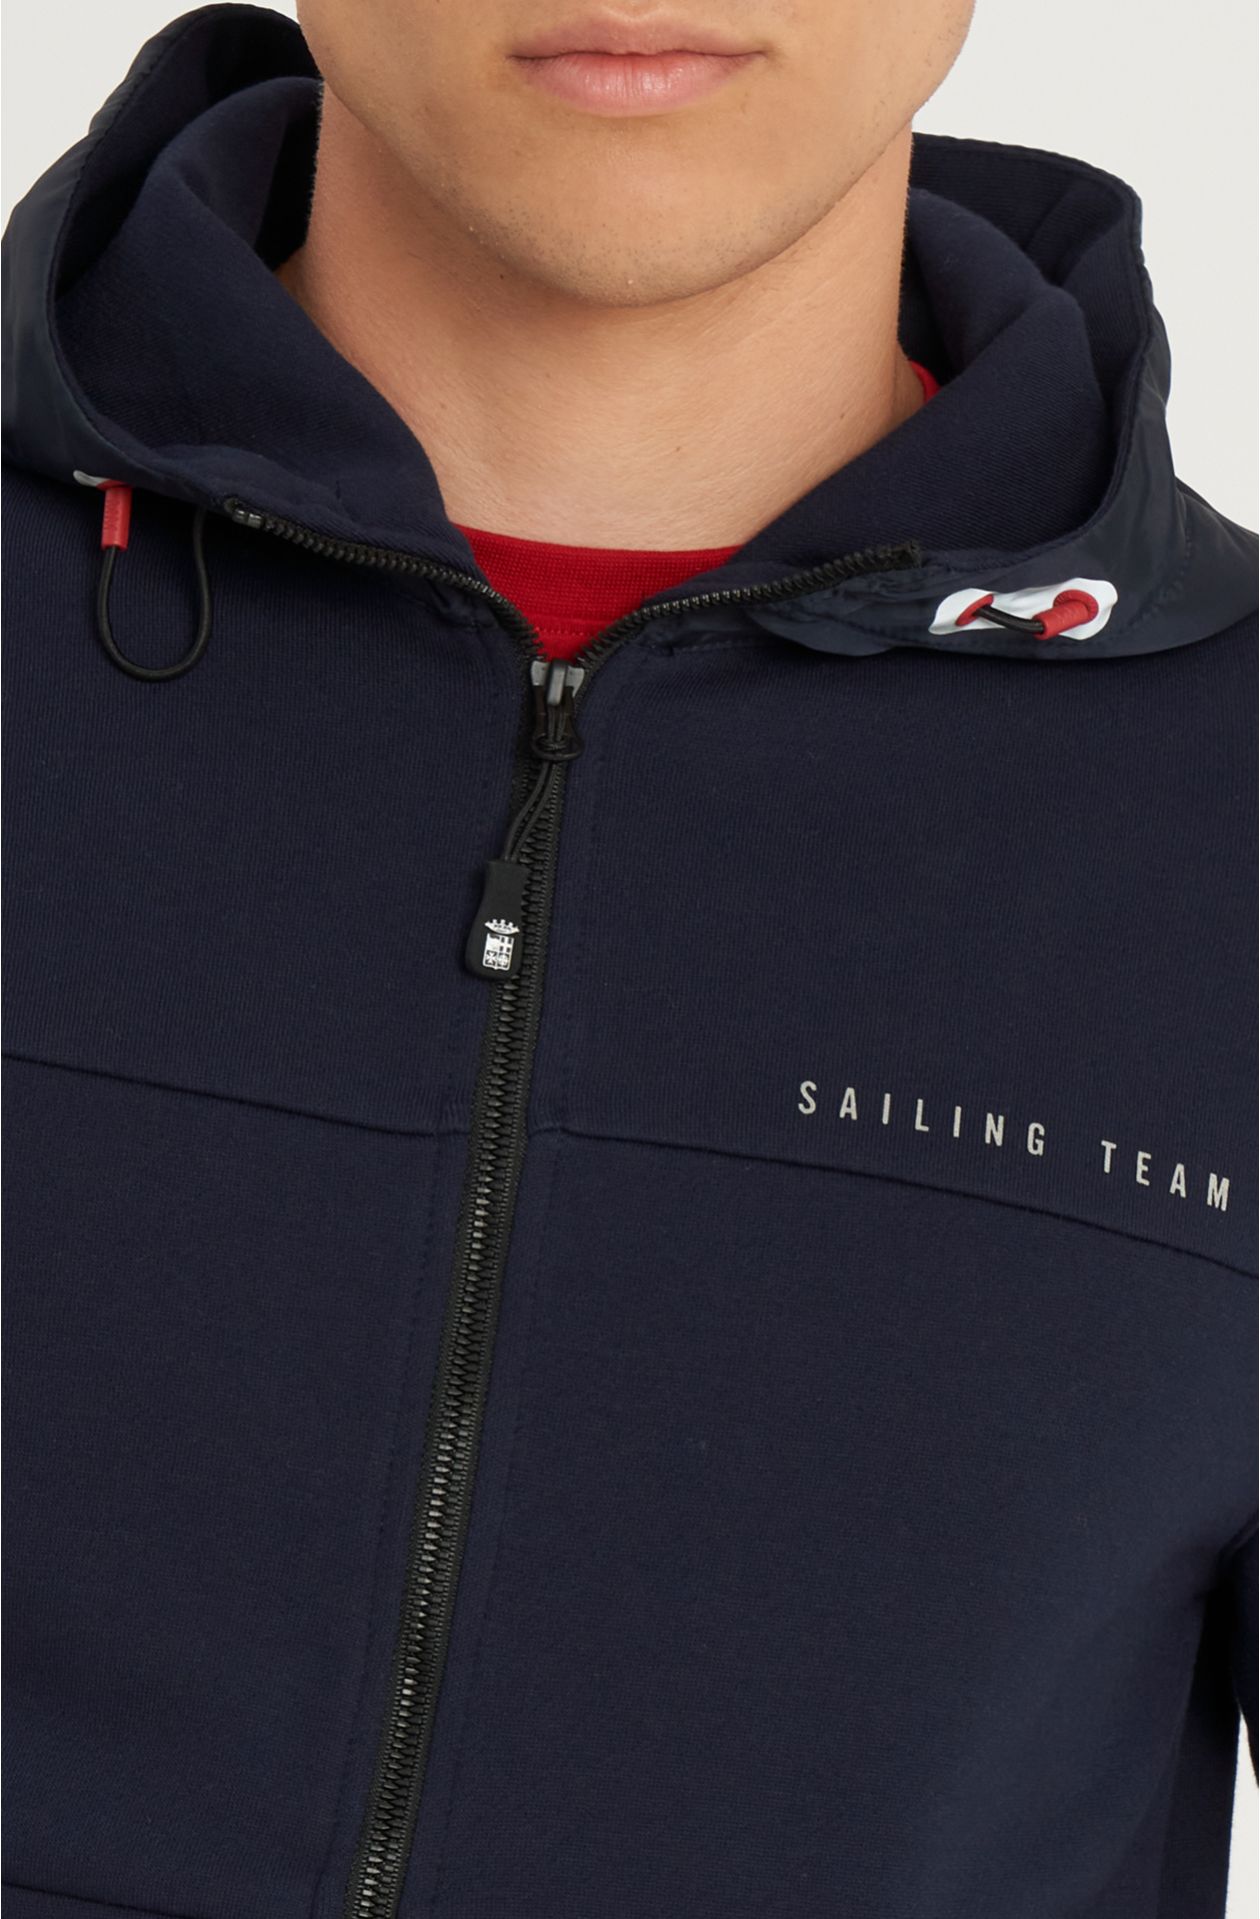 Sailing Team sailing section sweatshirt